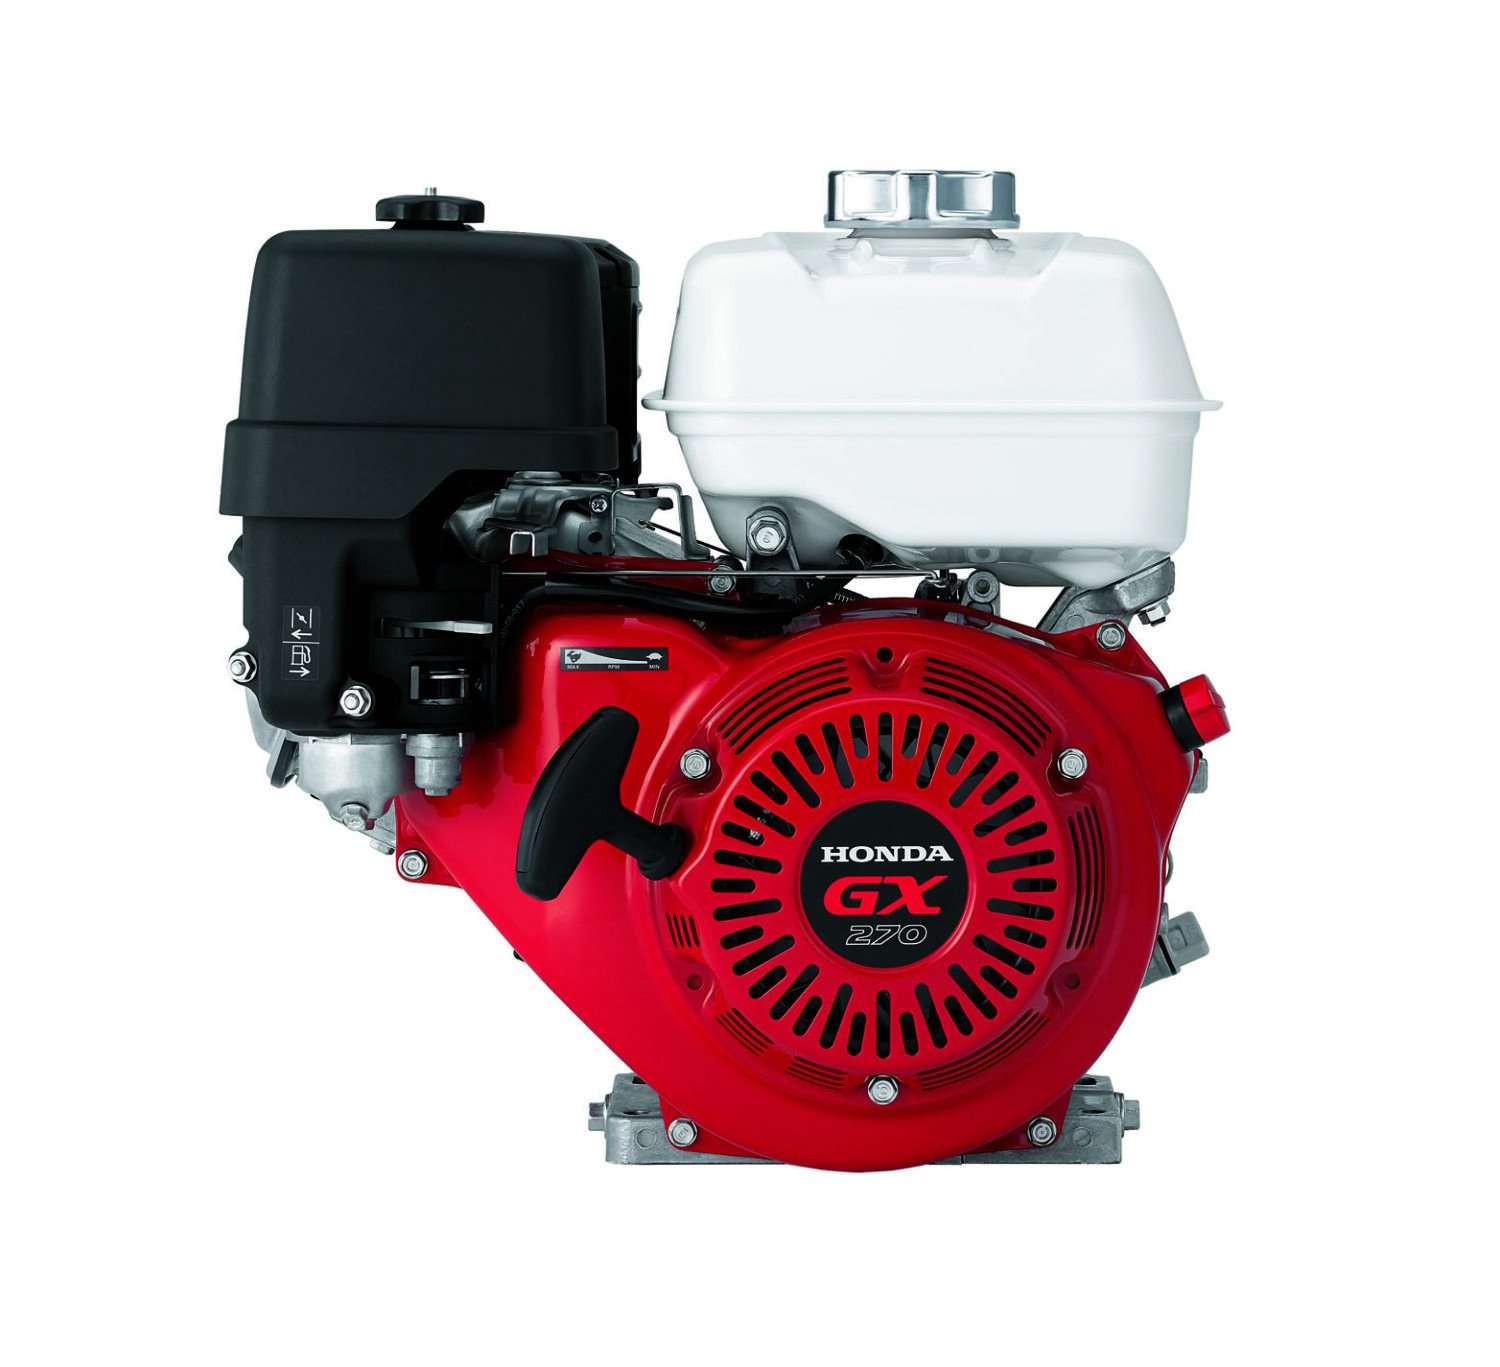 Simpson, Simpson ALH4033 4000 PSI 3.3 GPM Honda Gas Pressure Washer Manufacturer RFB